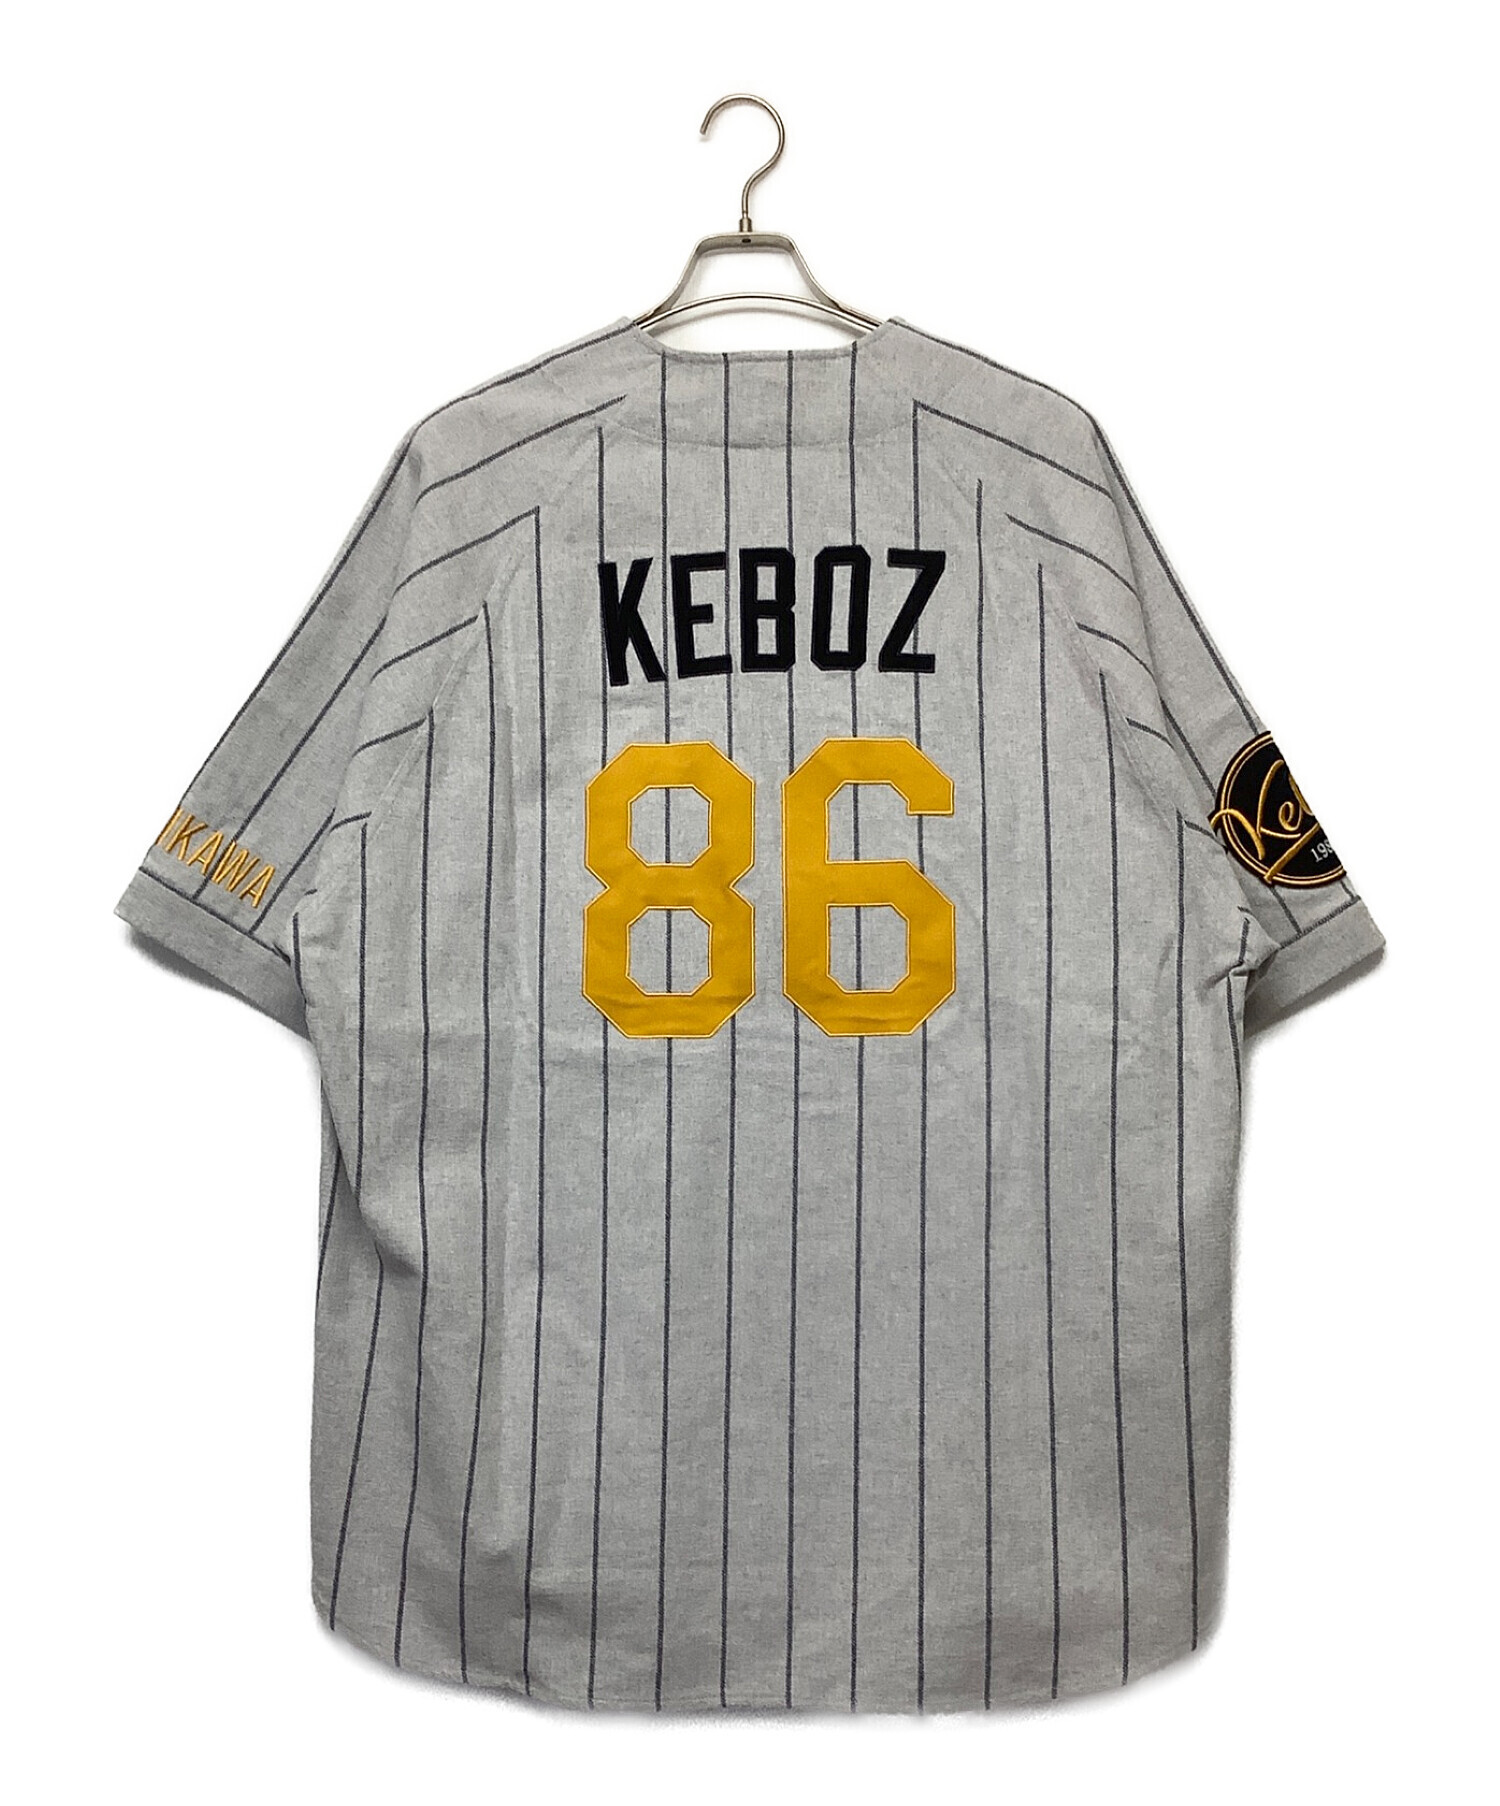 Keboz freak's store コラボ ベースボールシャツ ケボズ-